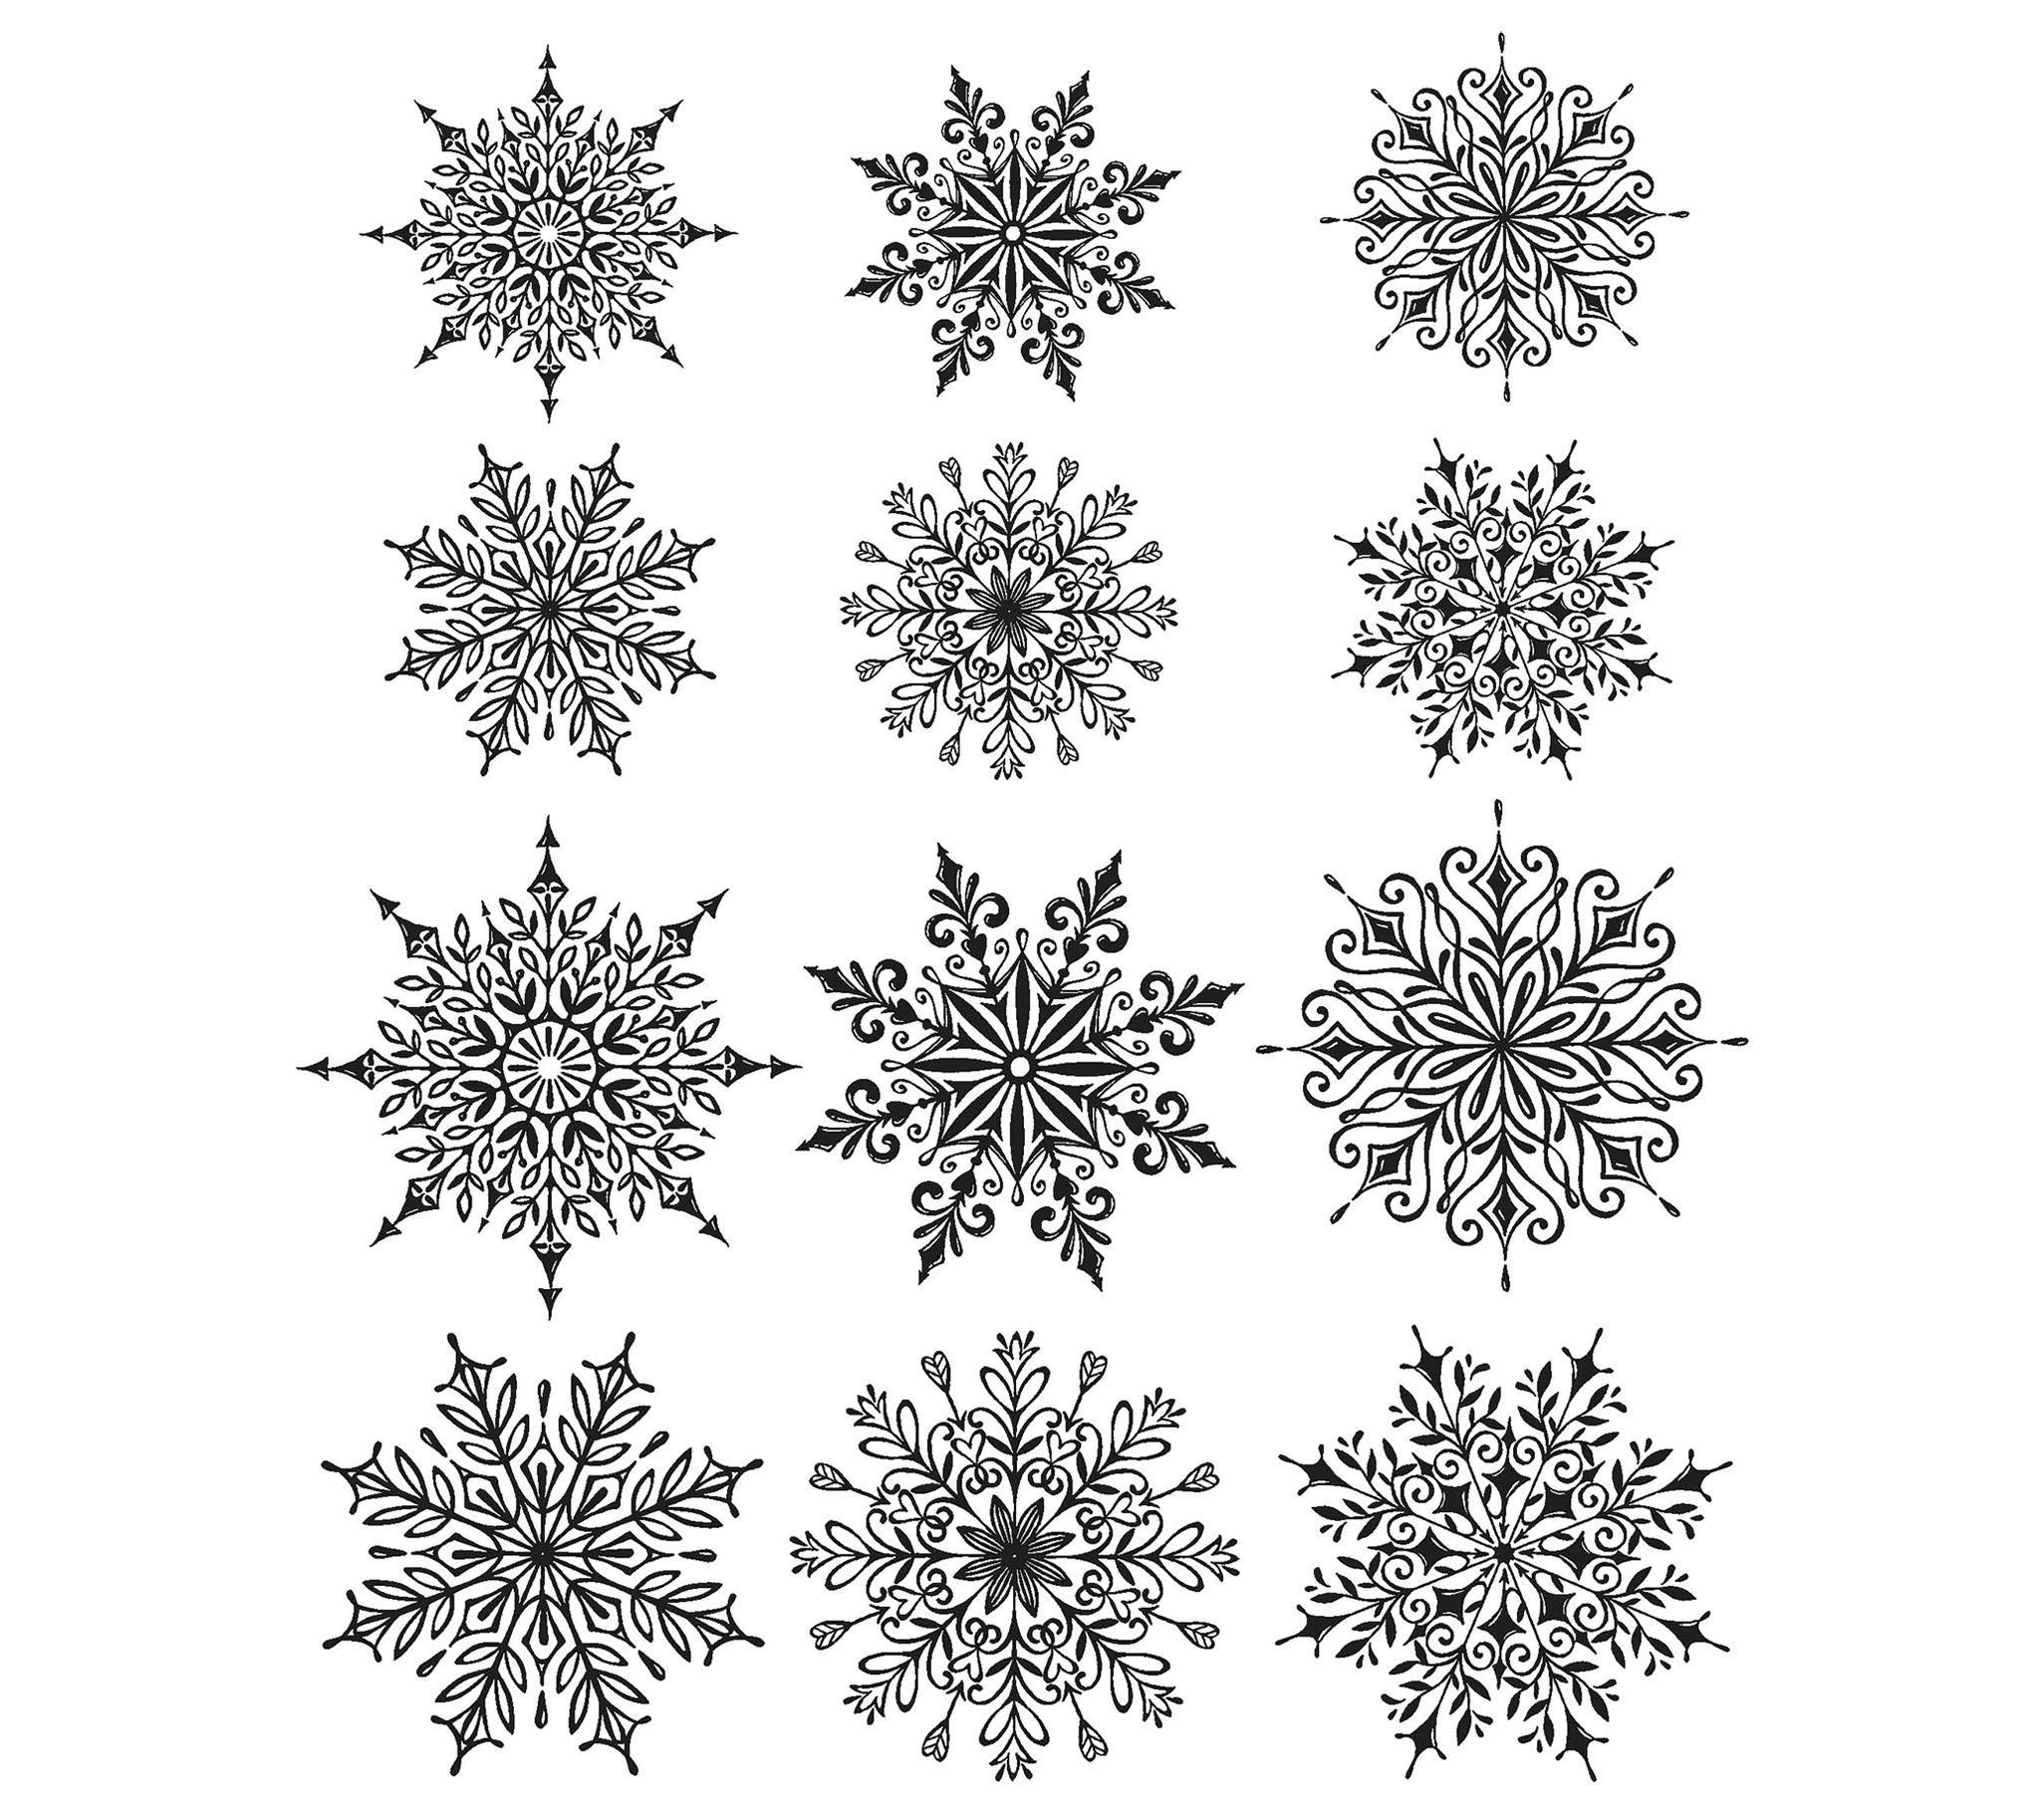 Tim Holtz Cling Stamps - Mini Swirly Snowflakes - QVC.com